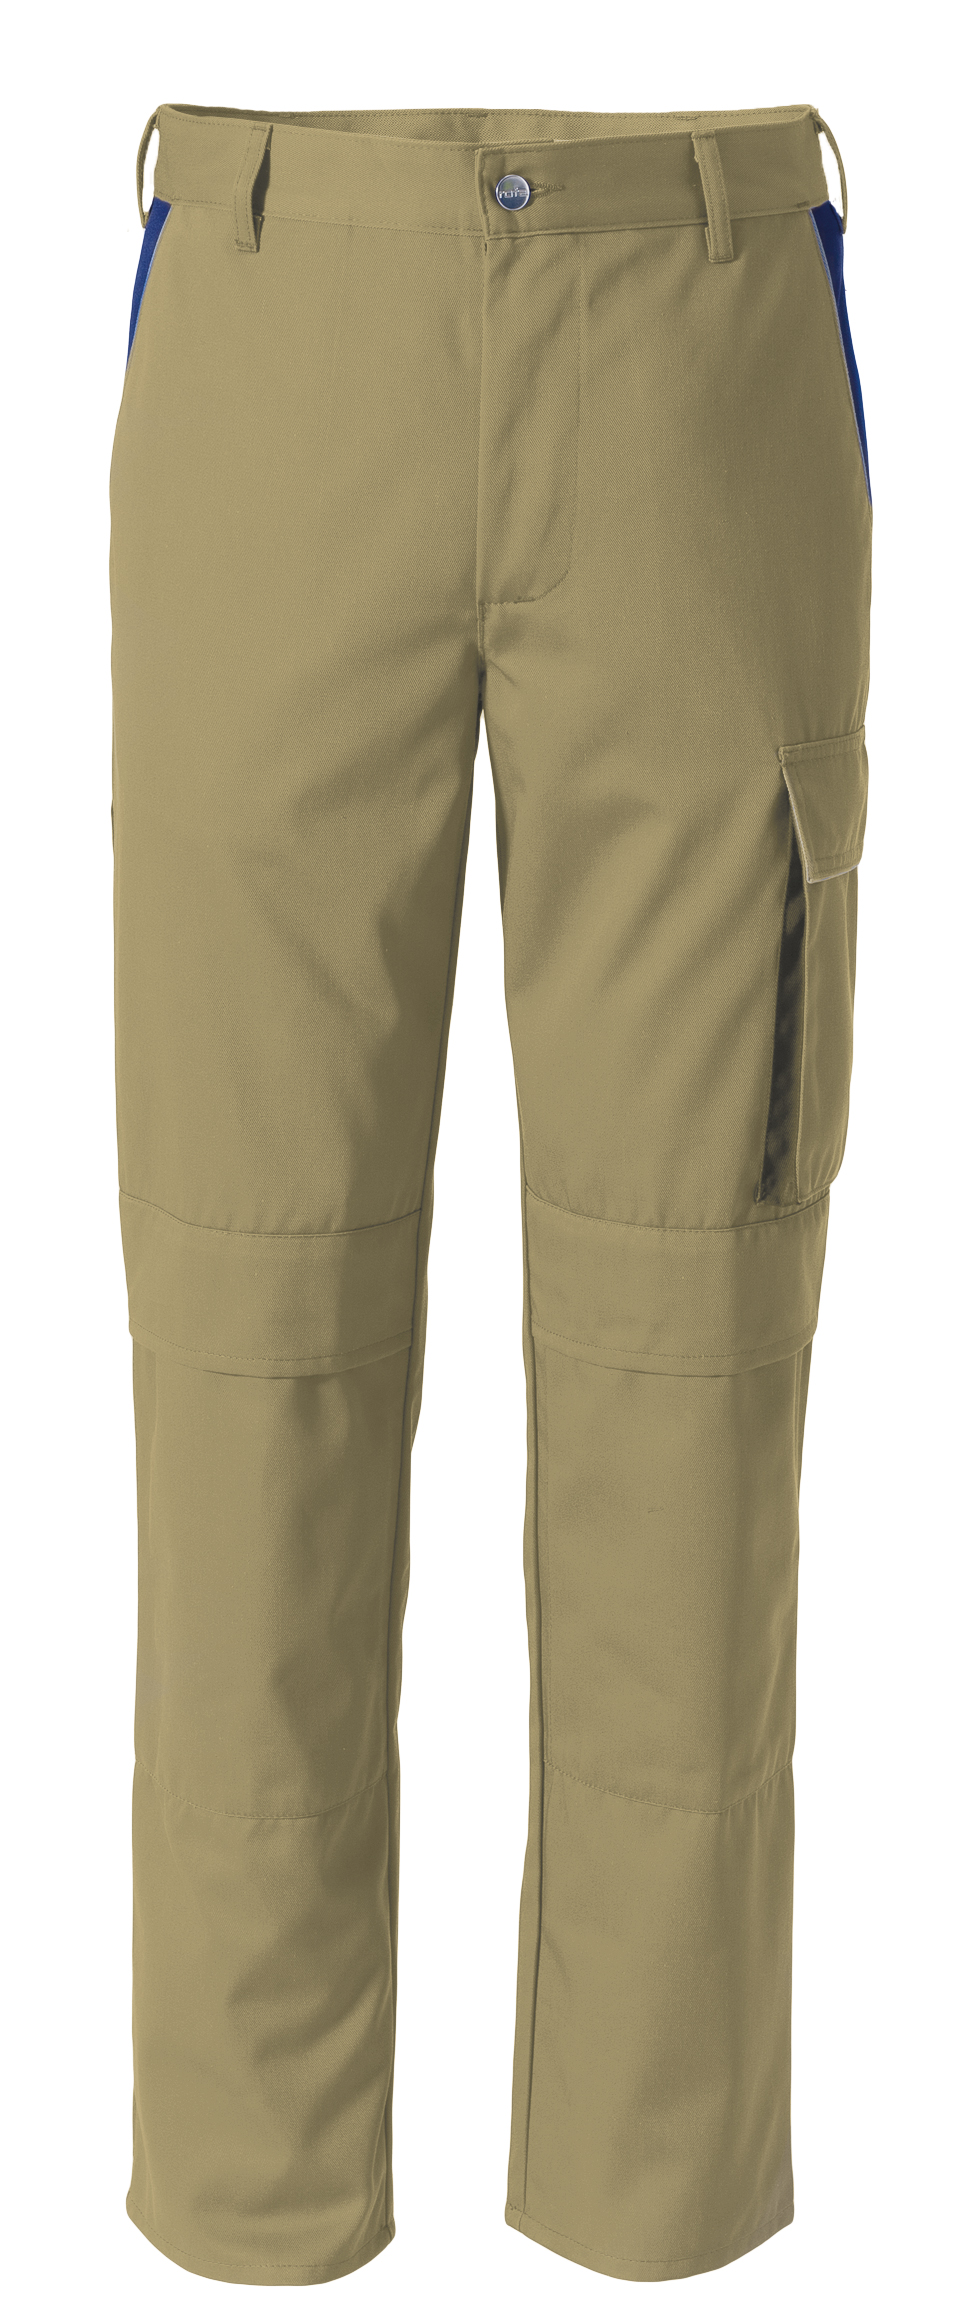 ROFA Bundhose Arbeitshose Berufshose Workerhose Arbeitskleidung Berufskleidung Vario khaki marine ca 295 g